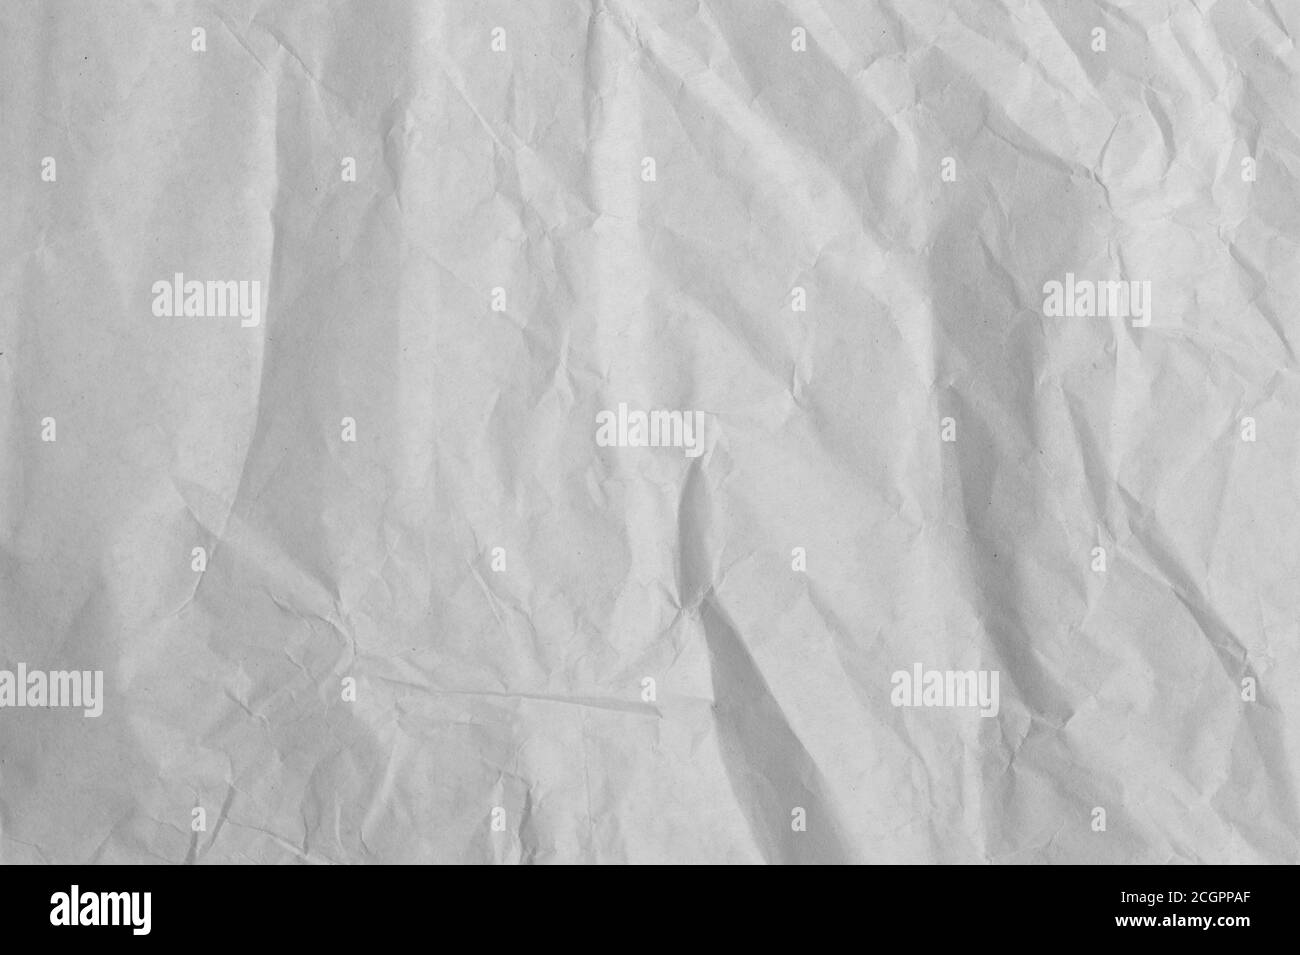 Paper texture crumpled white. Horizontal orientation. Stock Photo